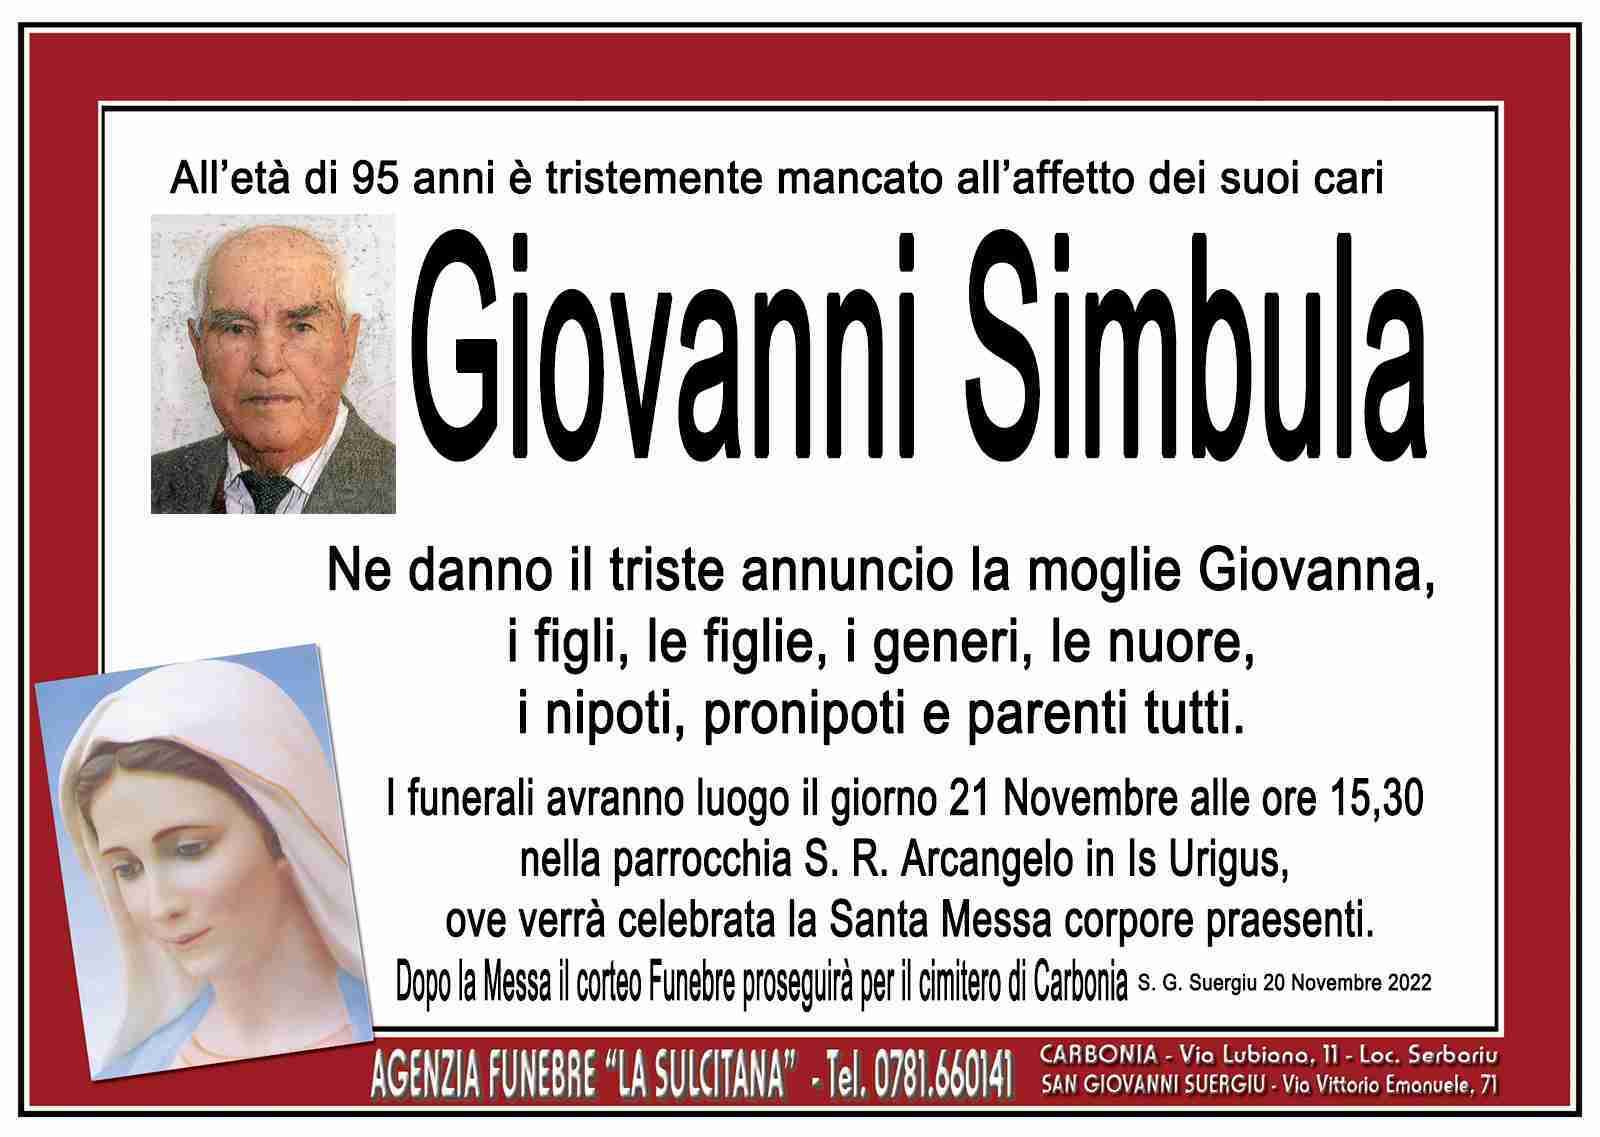 Giovanni Simbula